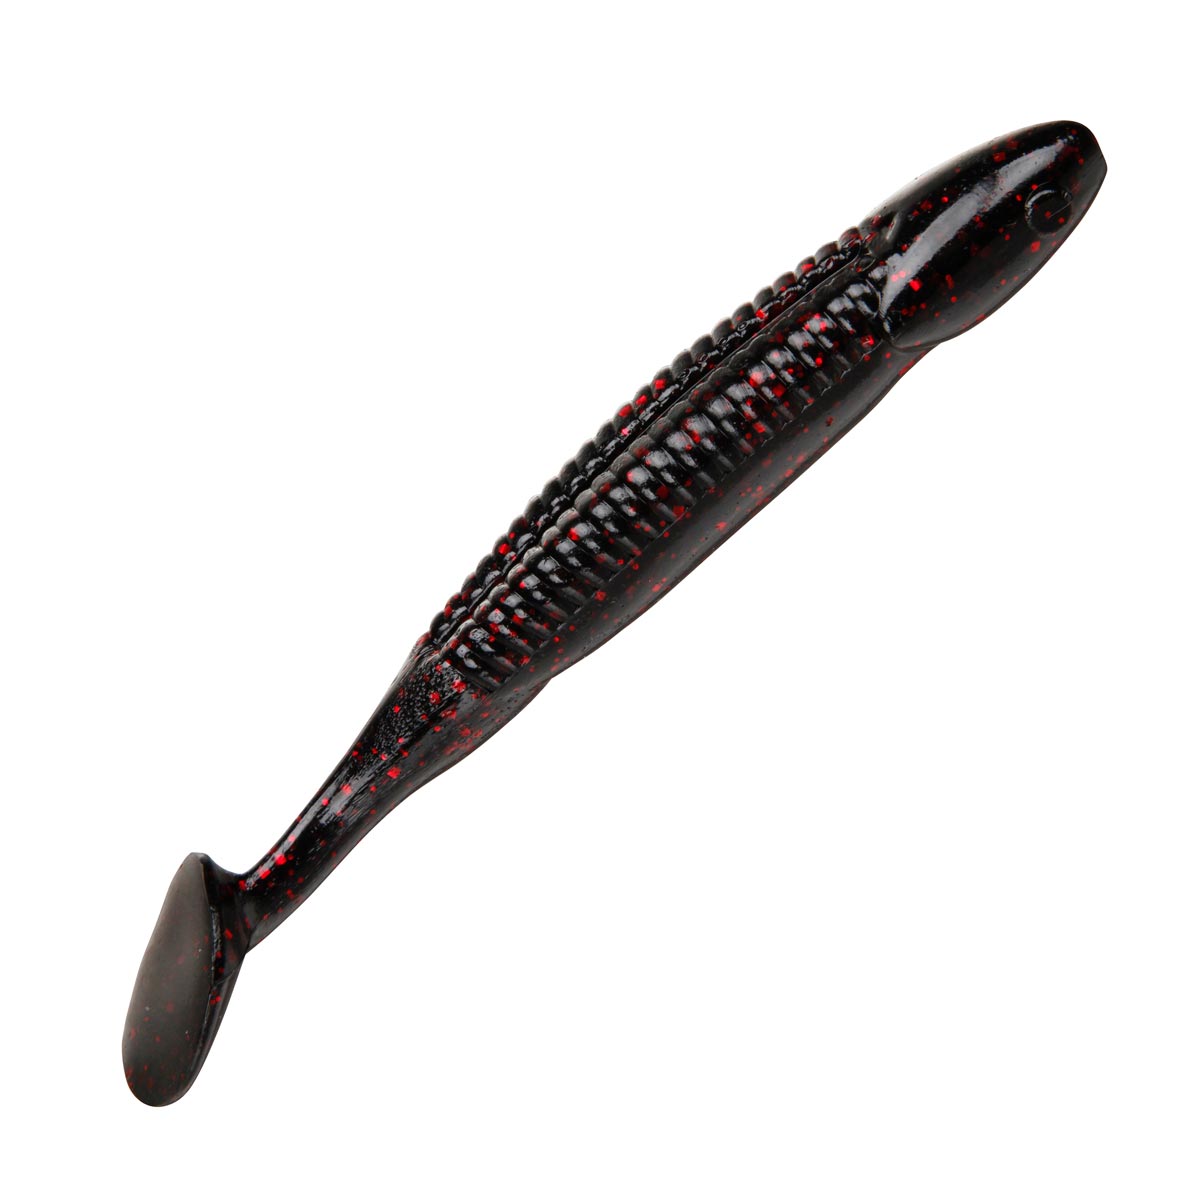 Zipper Dipper Neon black red flake freshwater soft bait